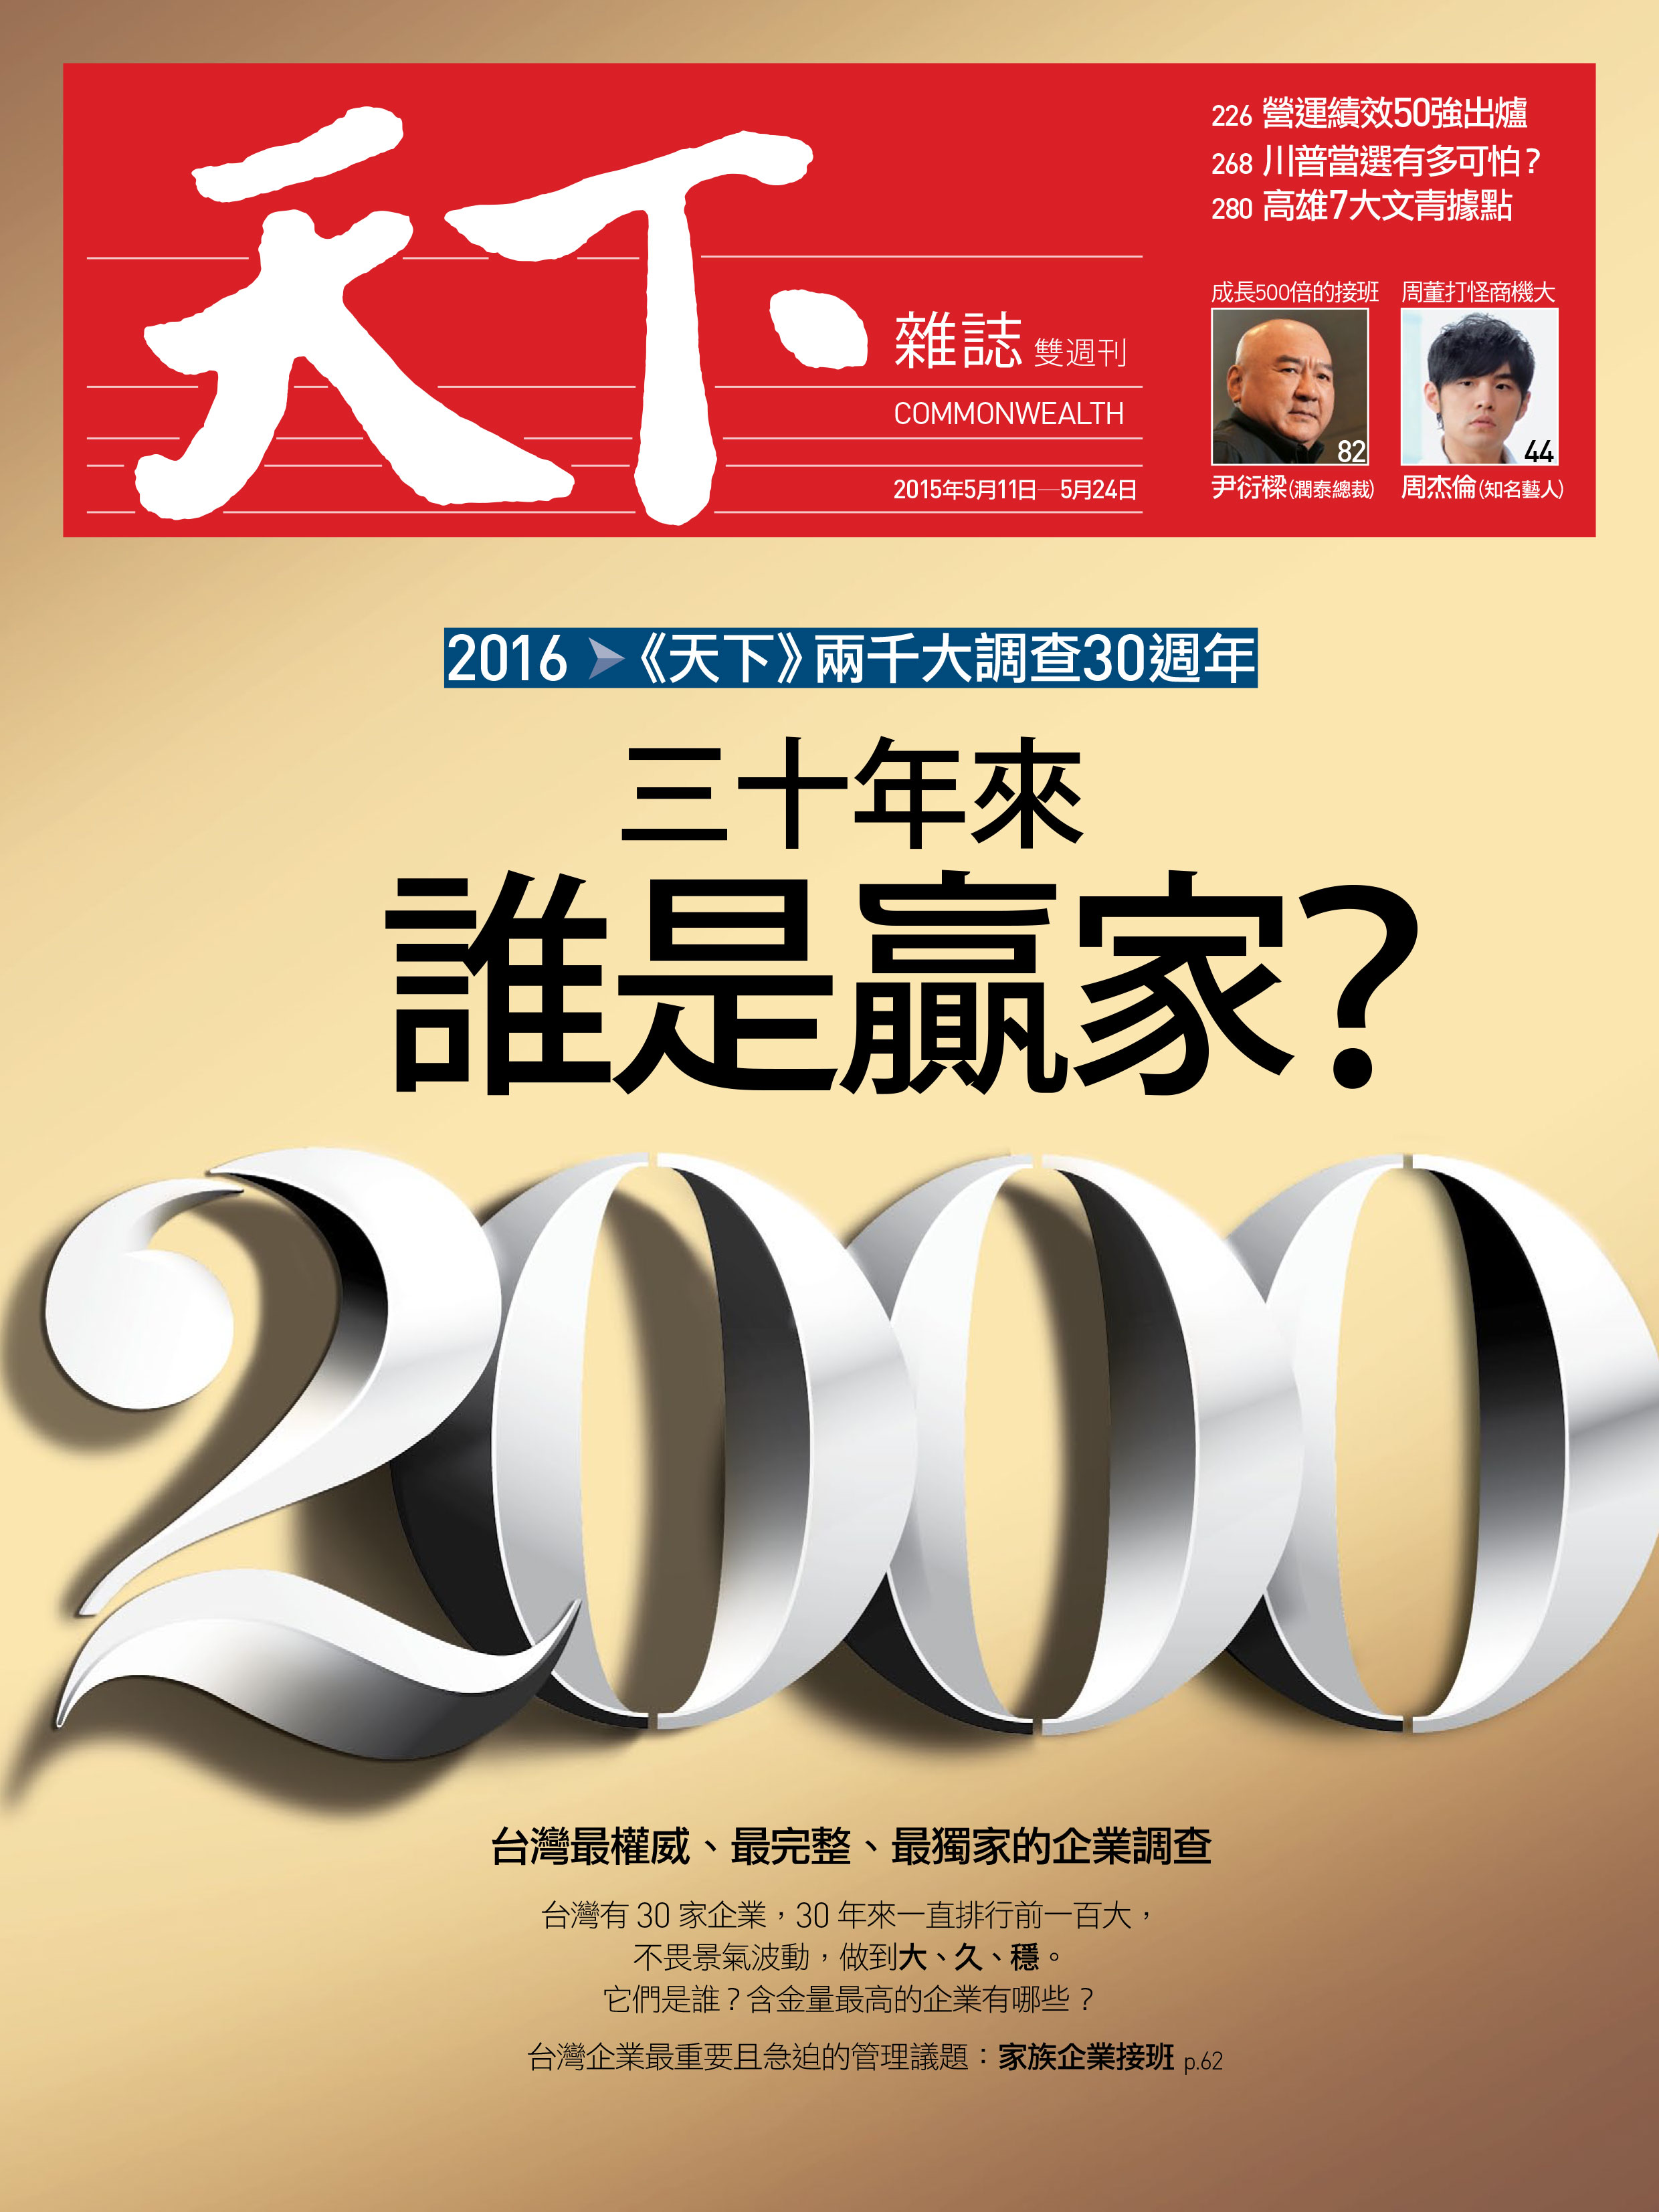 2016 Top 2000 Survey&mdash;30th Edition